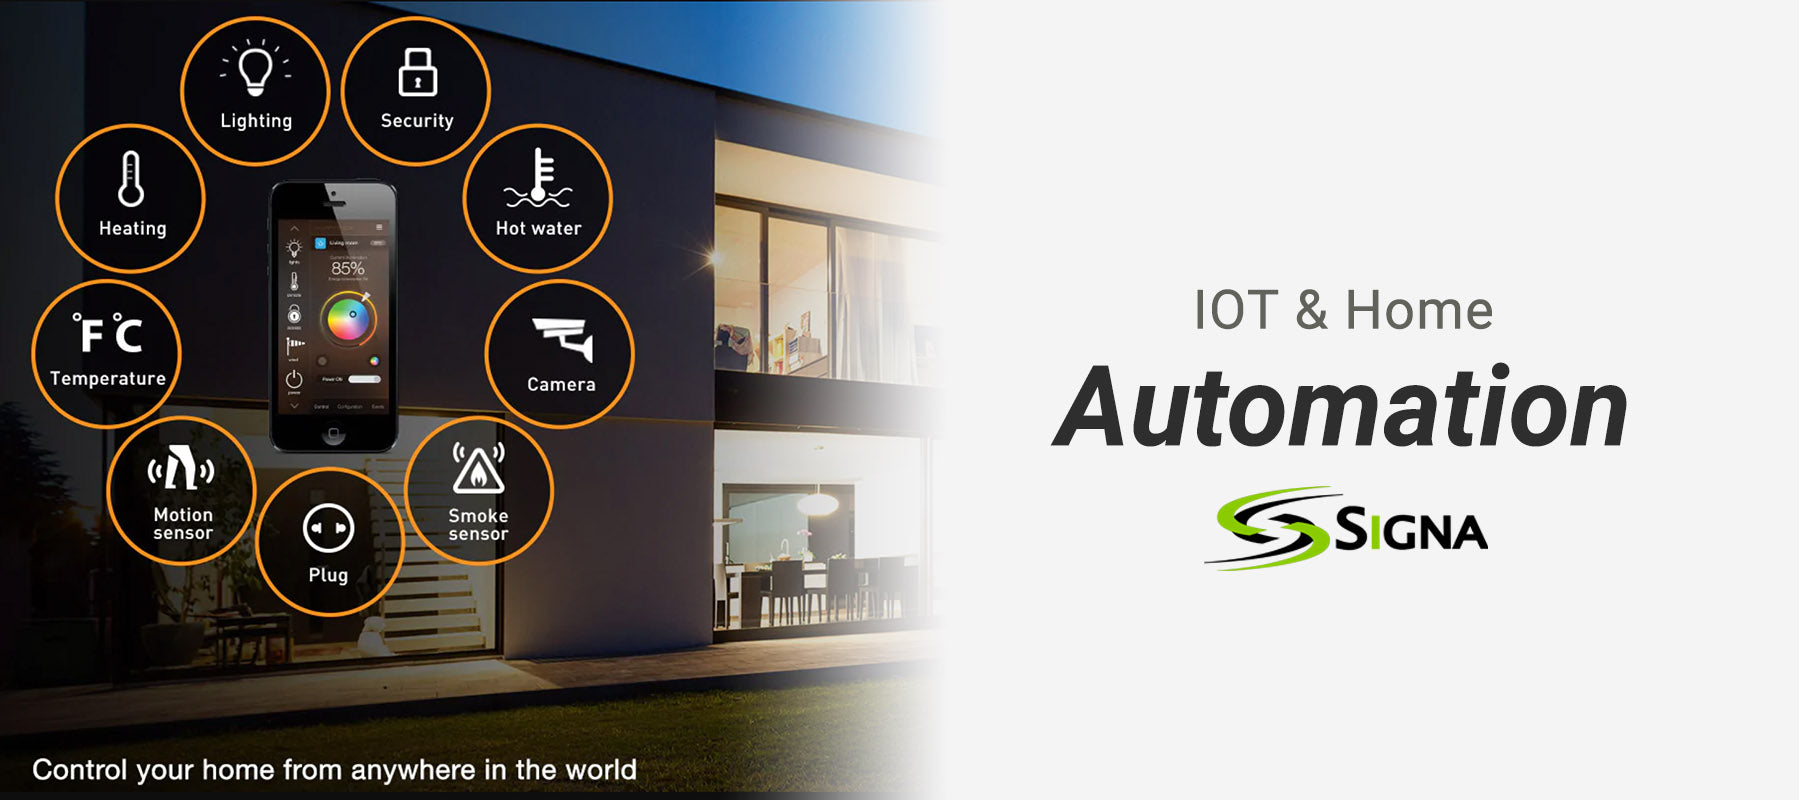 iot-home-automation-smart-home-smarthome-setup-installation-toronto-canada